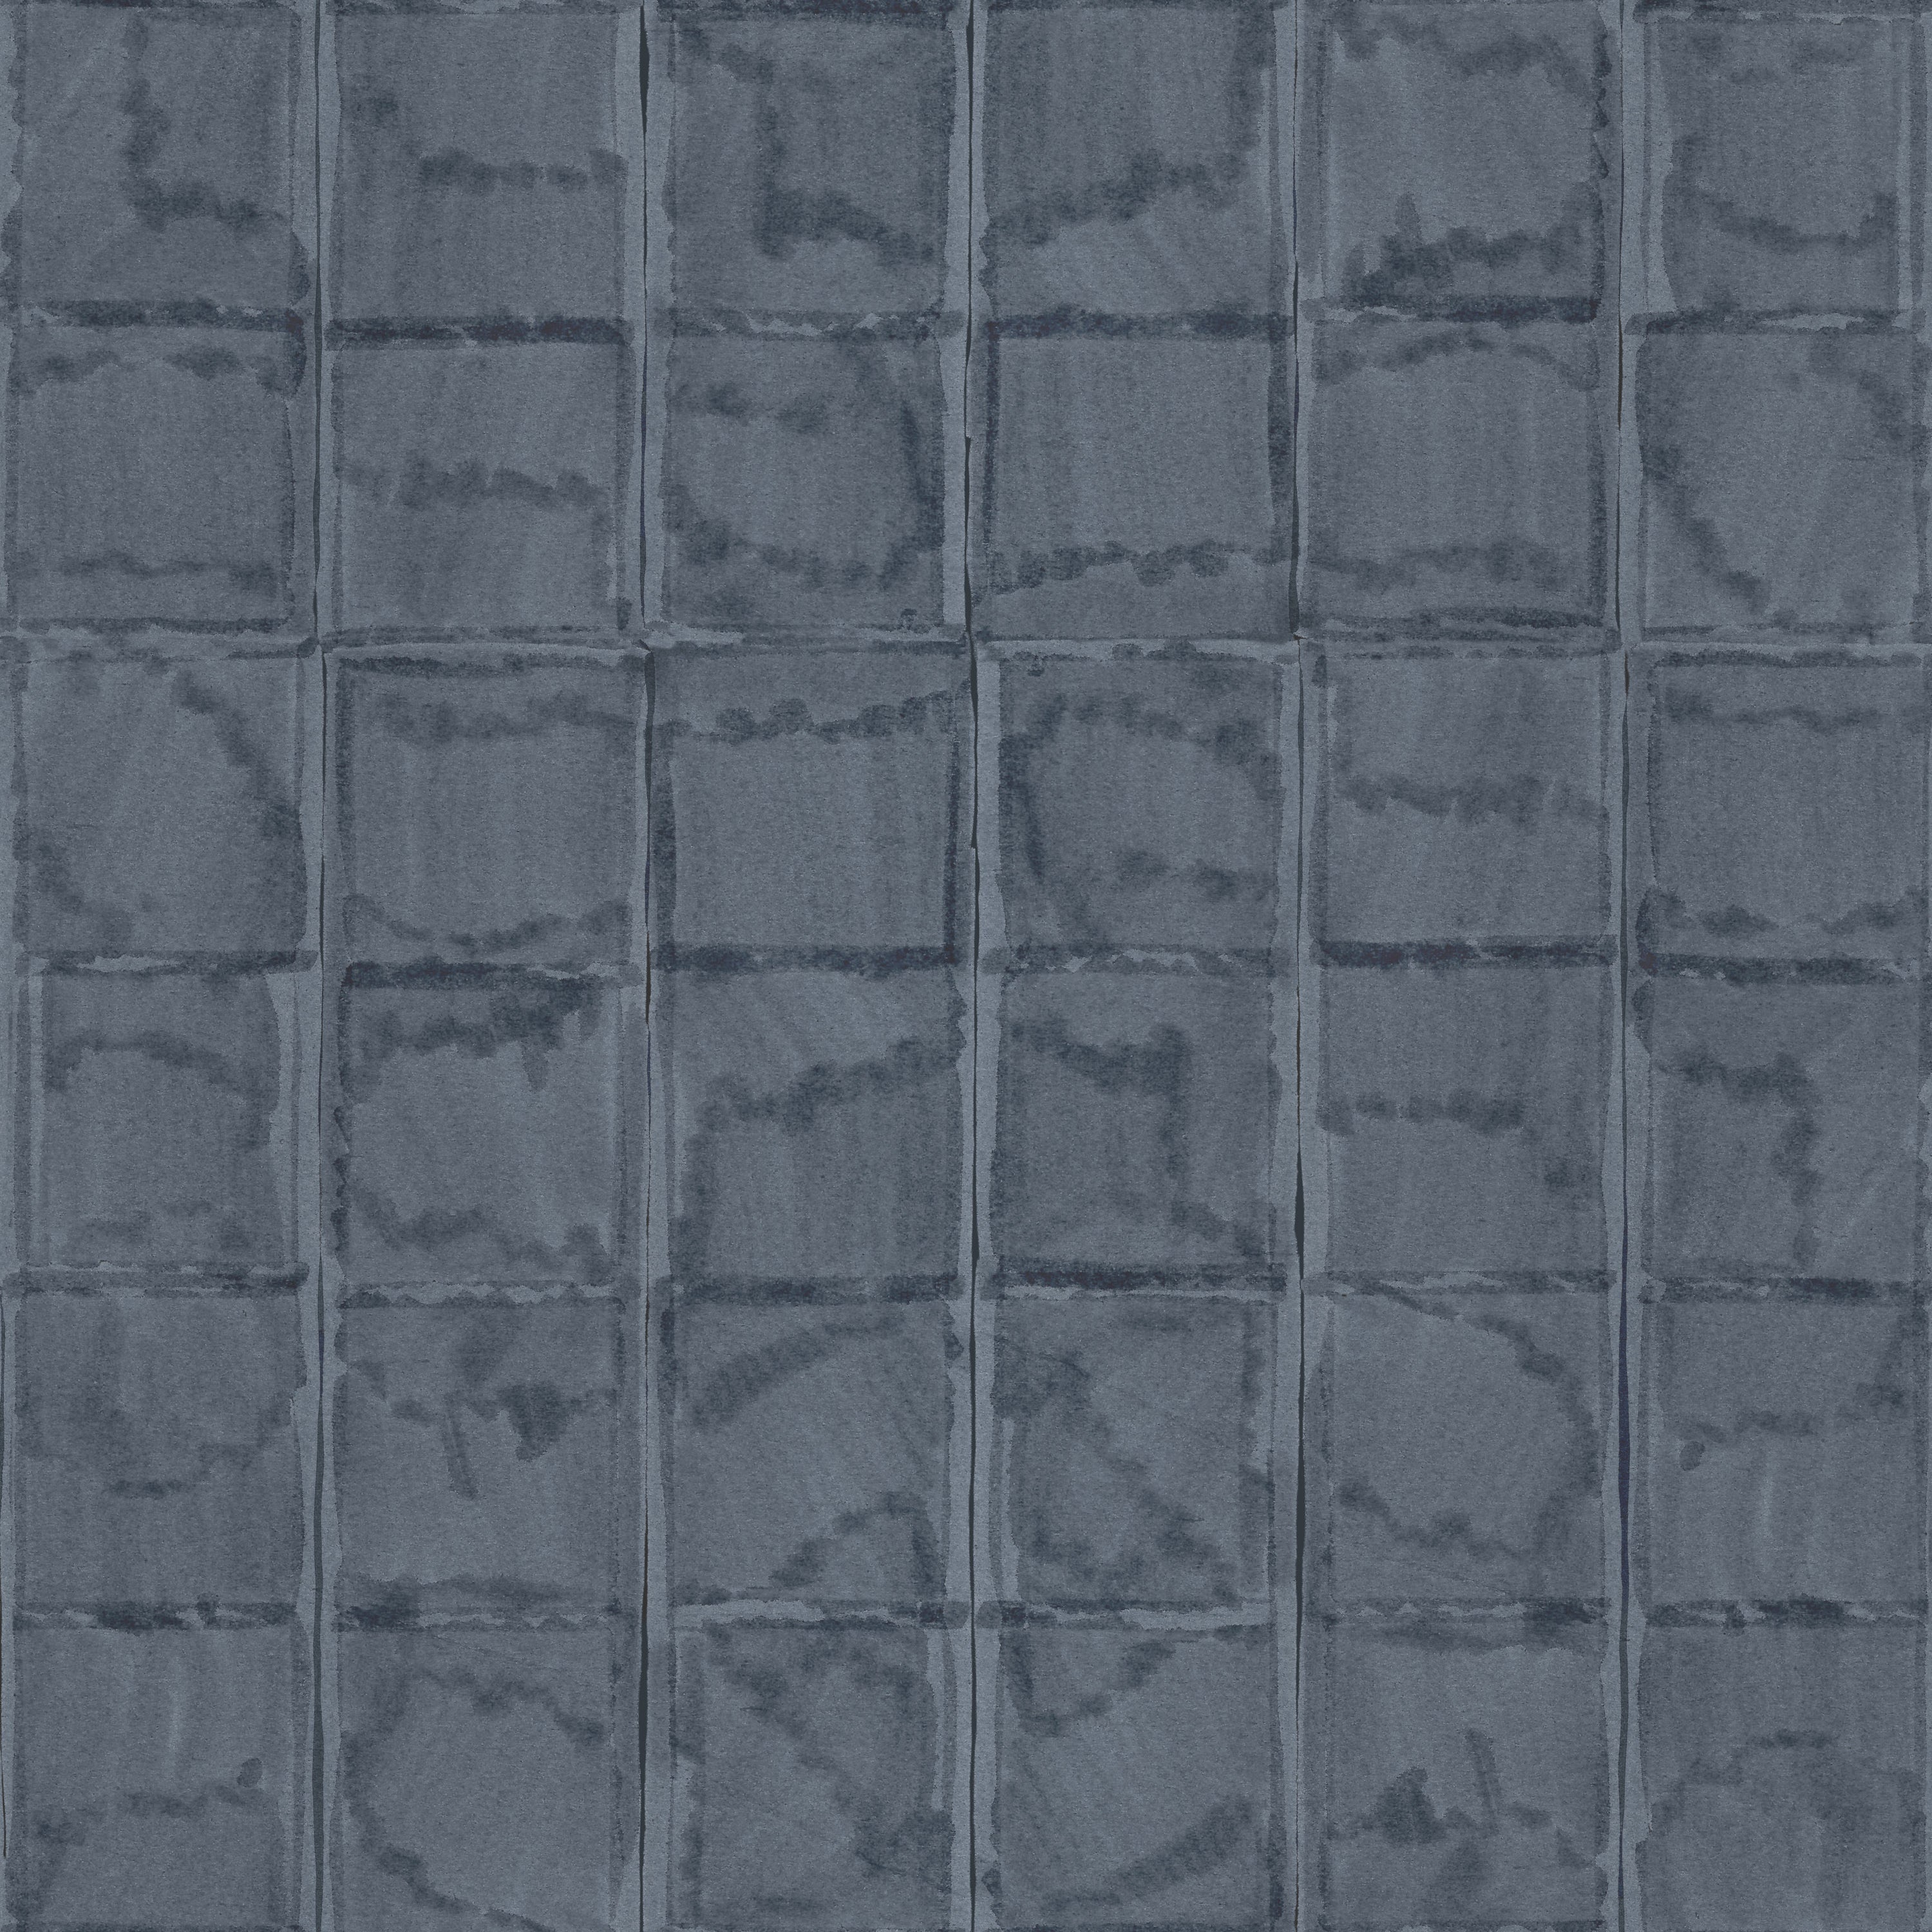 Detail of wallpaper in a textural block print in mottled blue-black.